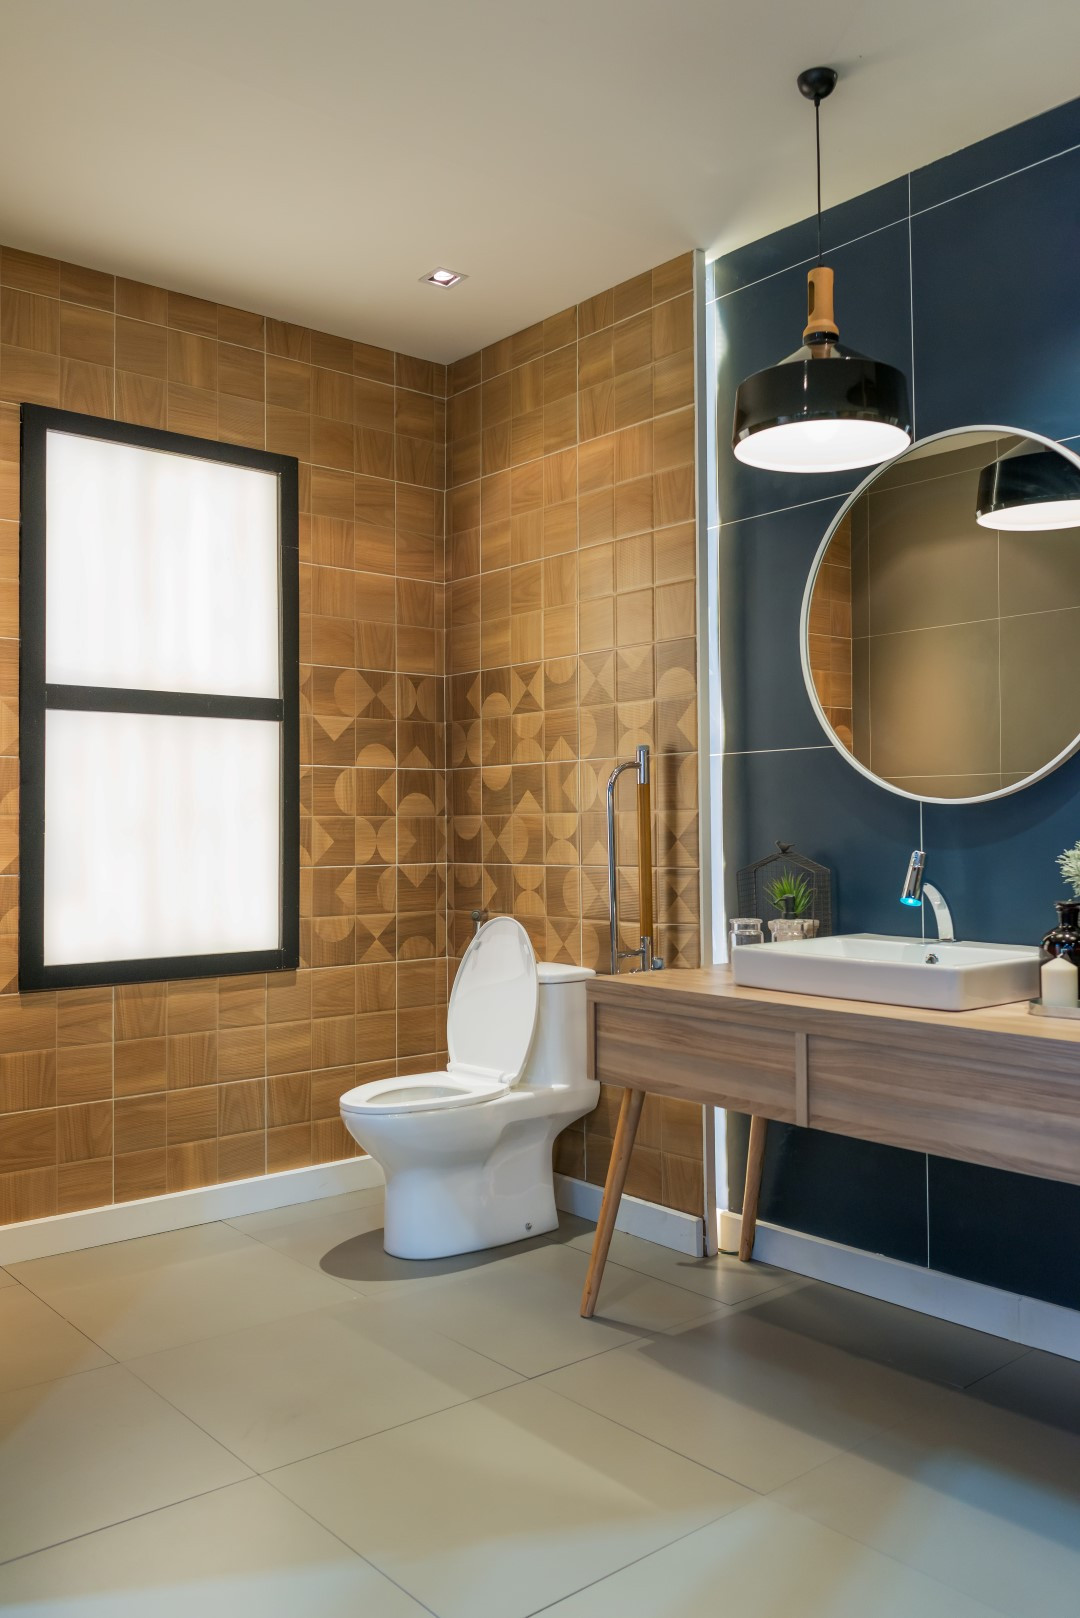 Most Popular Bathroom Tile
 The 6 Top Bathroom Tile Trends of 2018